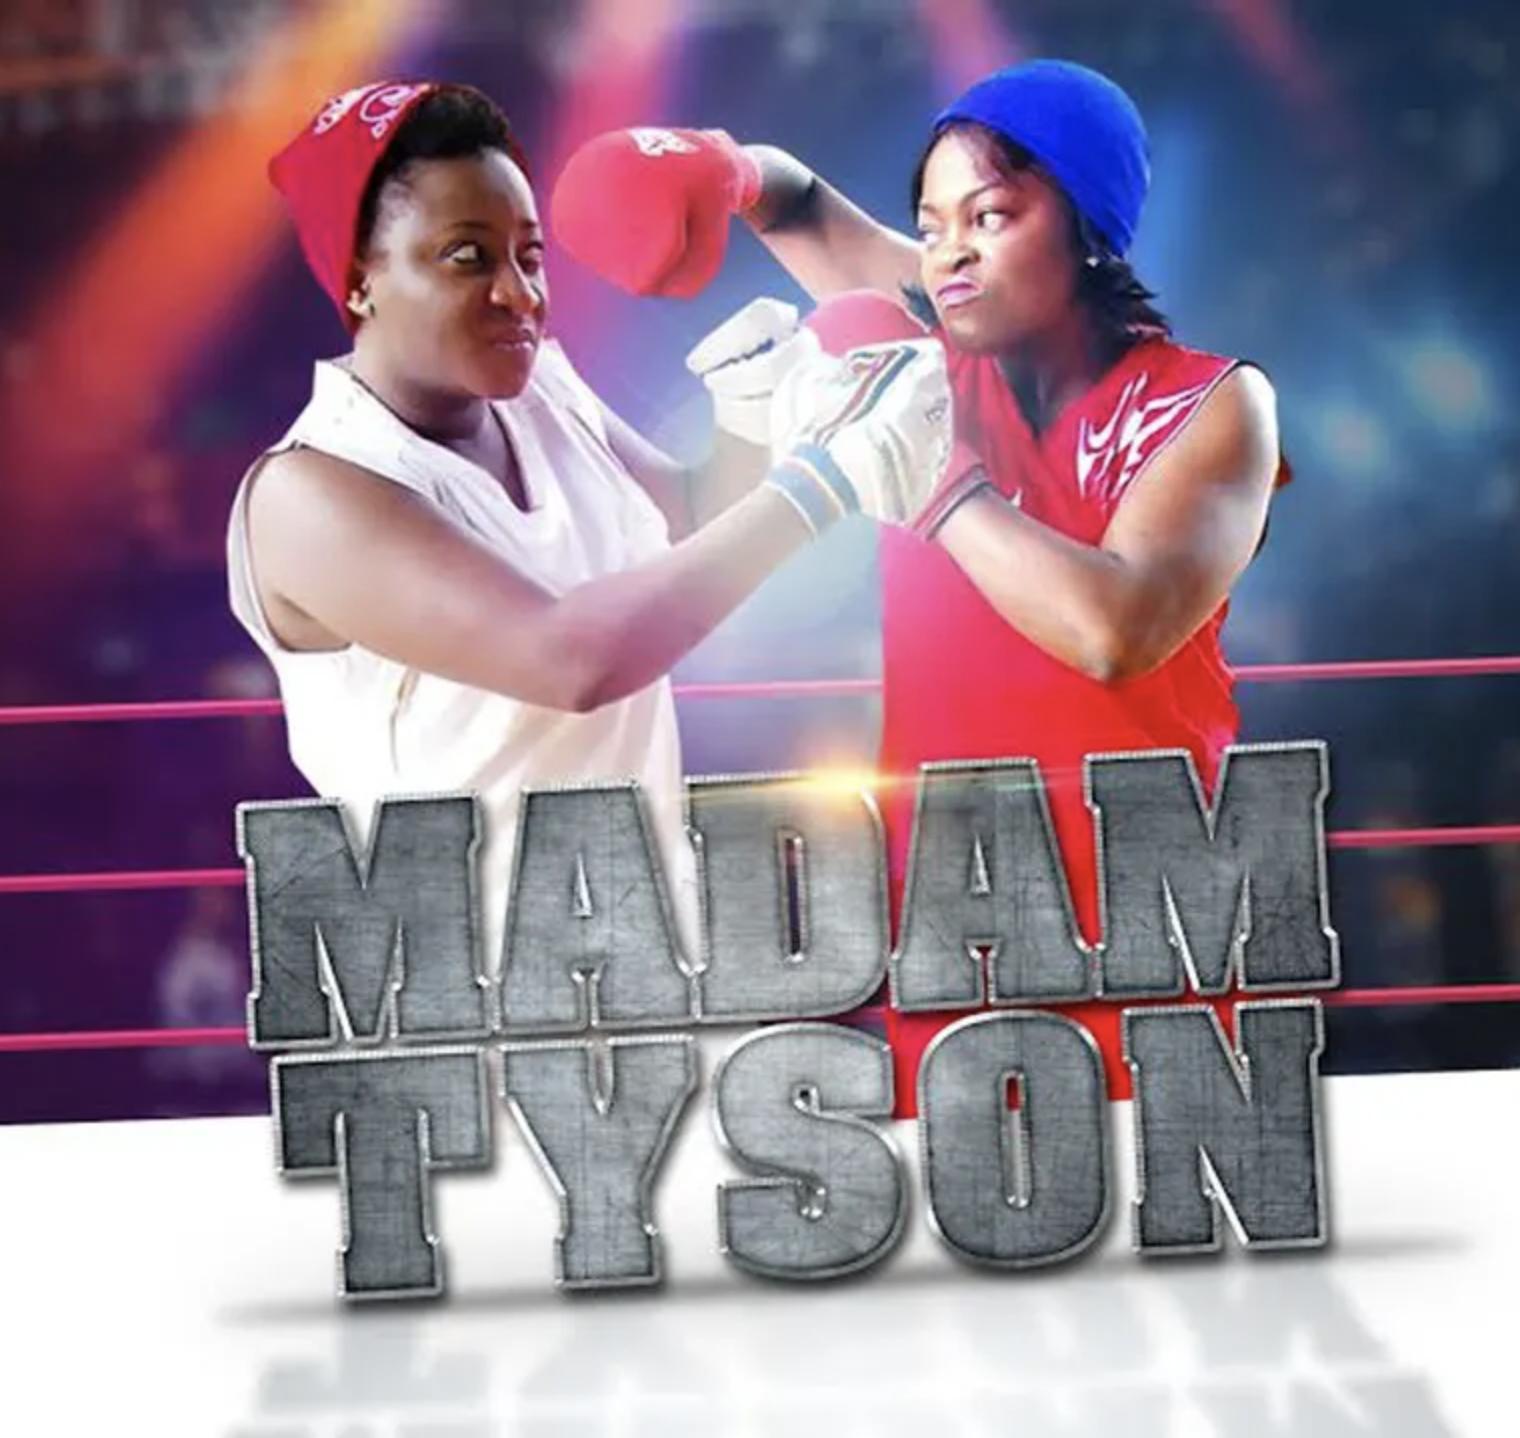 Madam Tyson 2014 Movie Poster